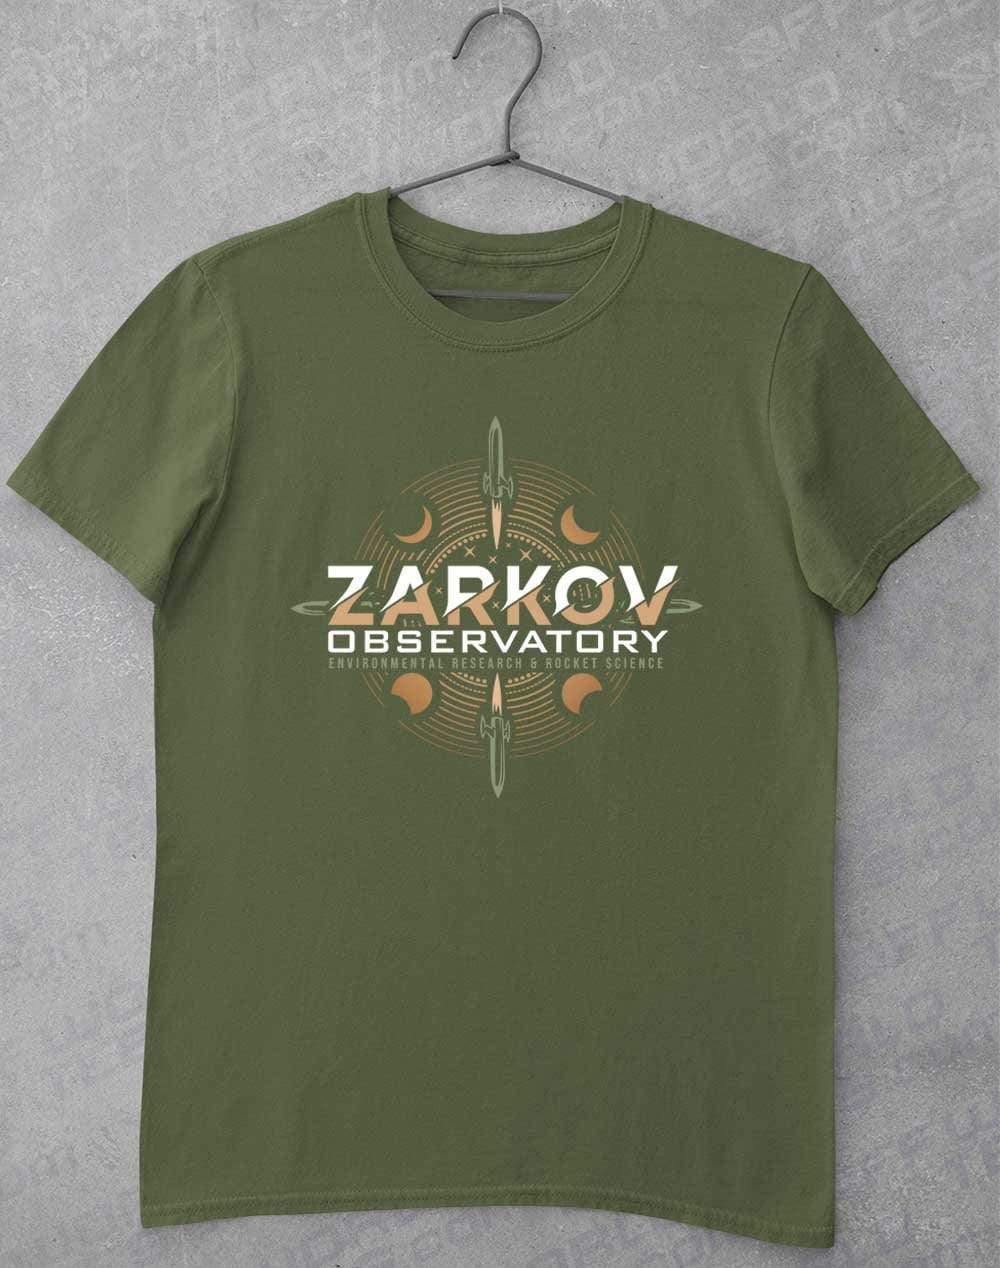 Zarkov Observatory T-Shirt S / Military Green  - Off World Tees